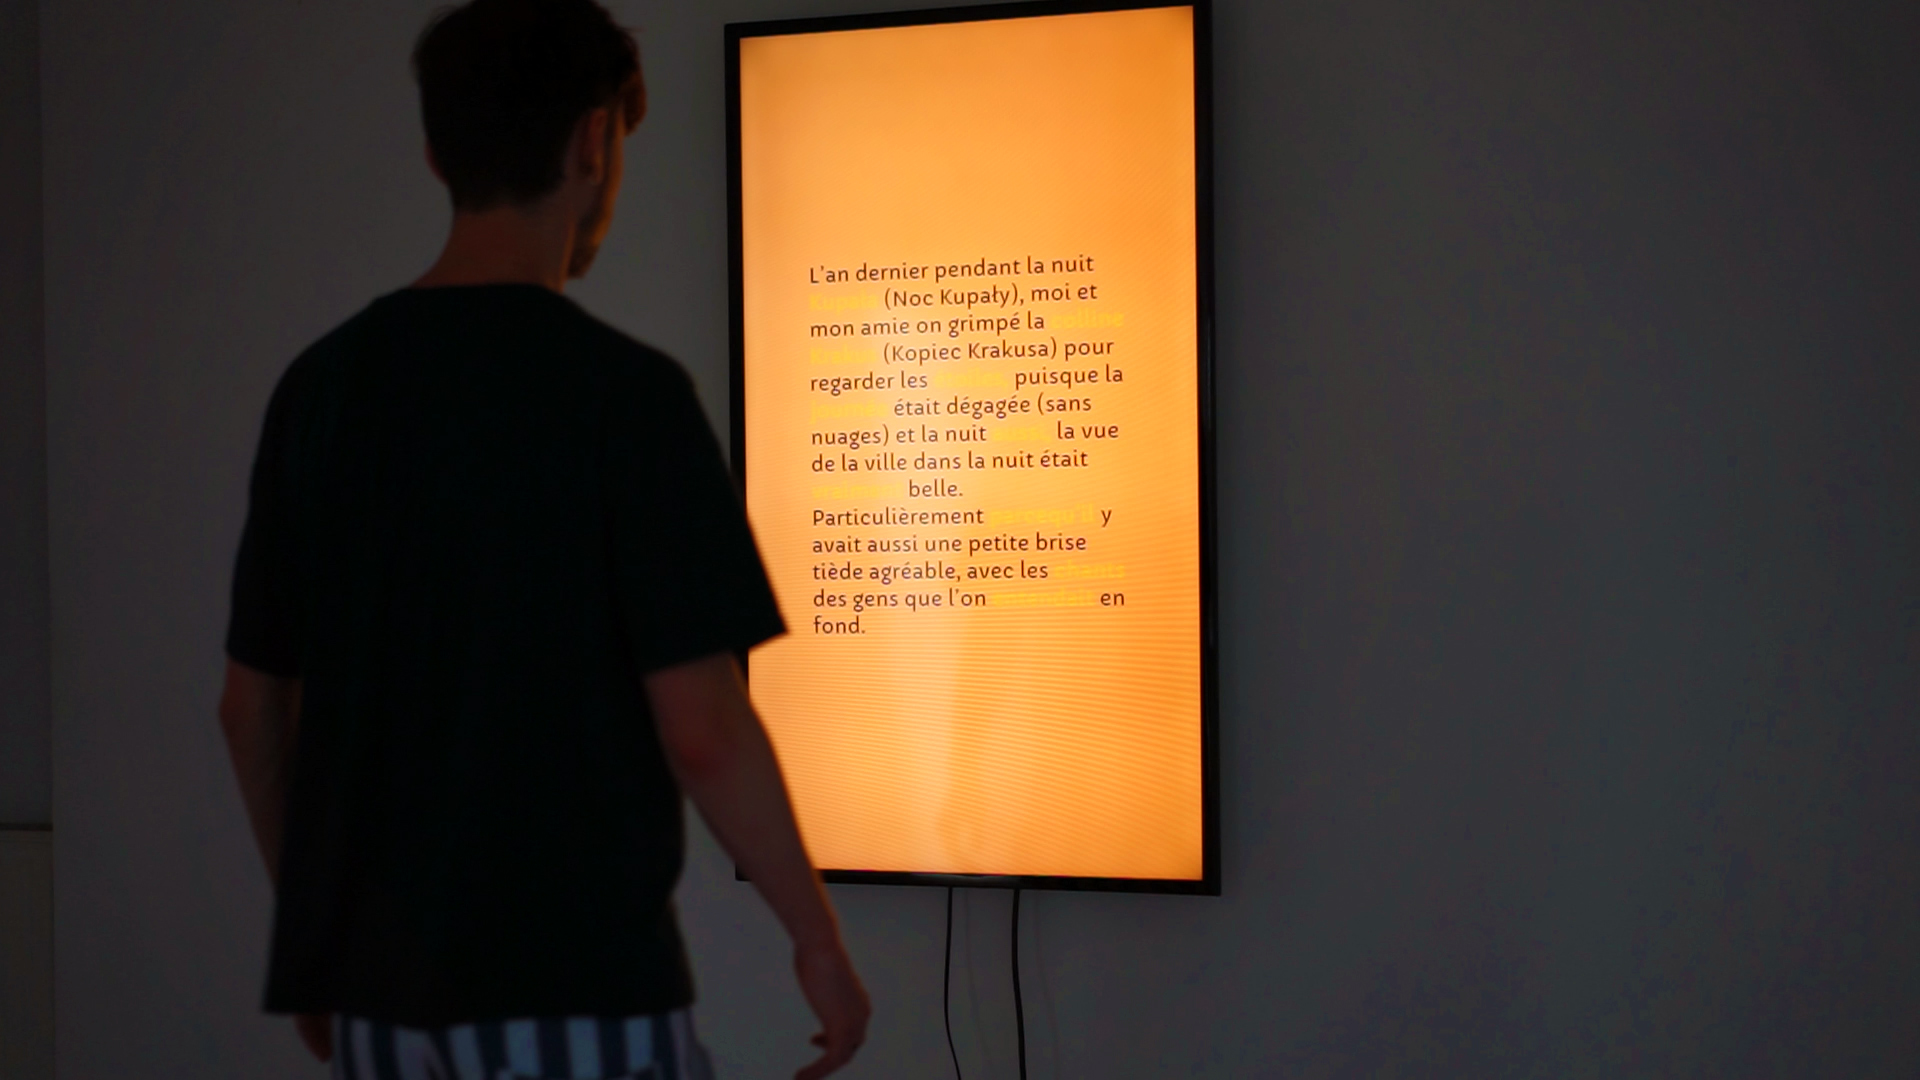 Hi Krakow, interactive installation, image 2, 2019, Sybille Clemente, graphic designer.